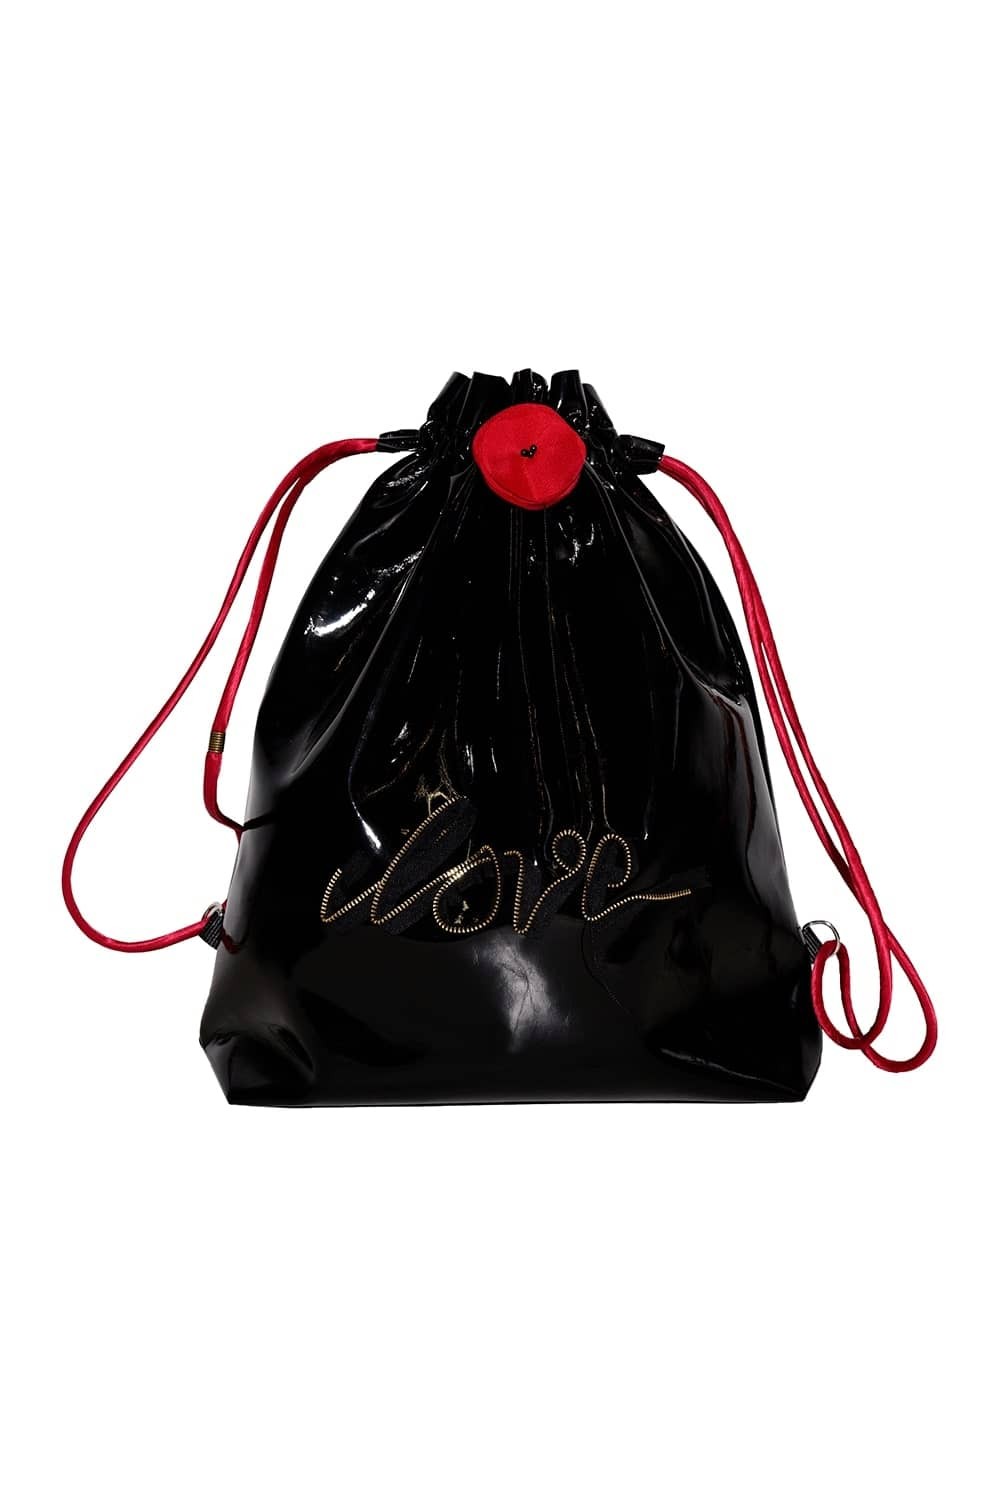 "LOVE" bag